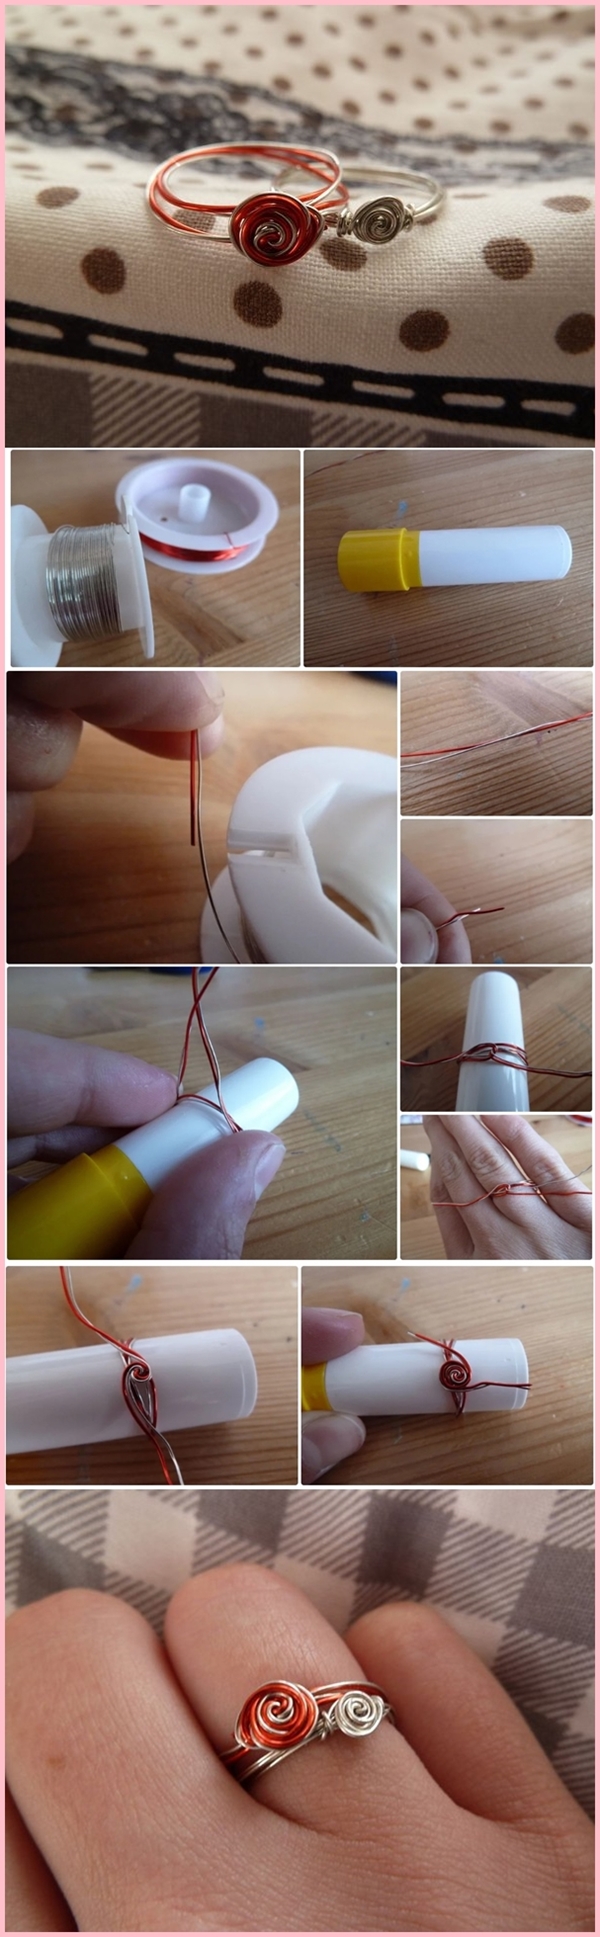 easy-peasy-diy-wire-rings-tutorials-for-teens